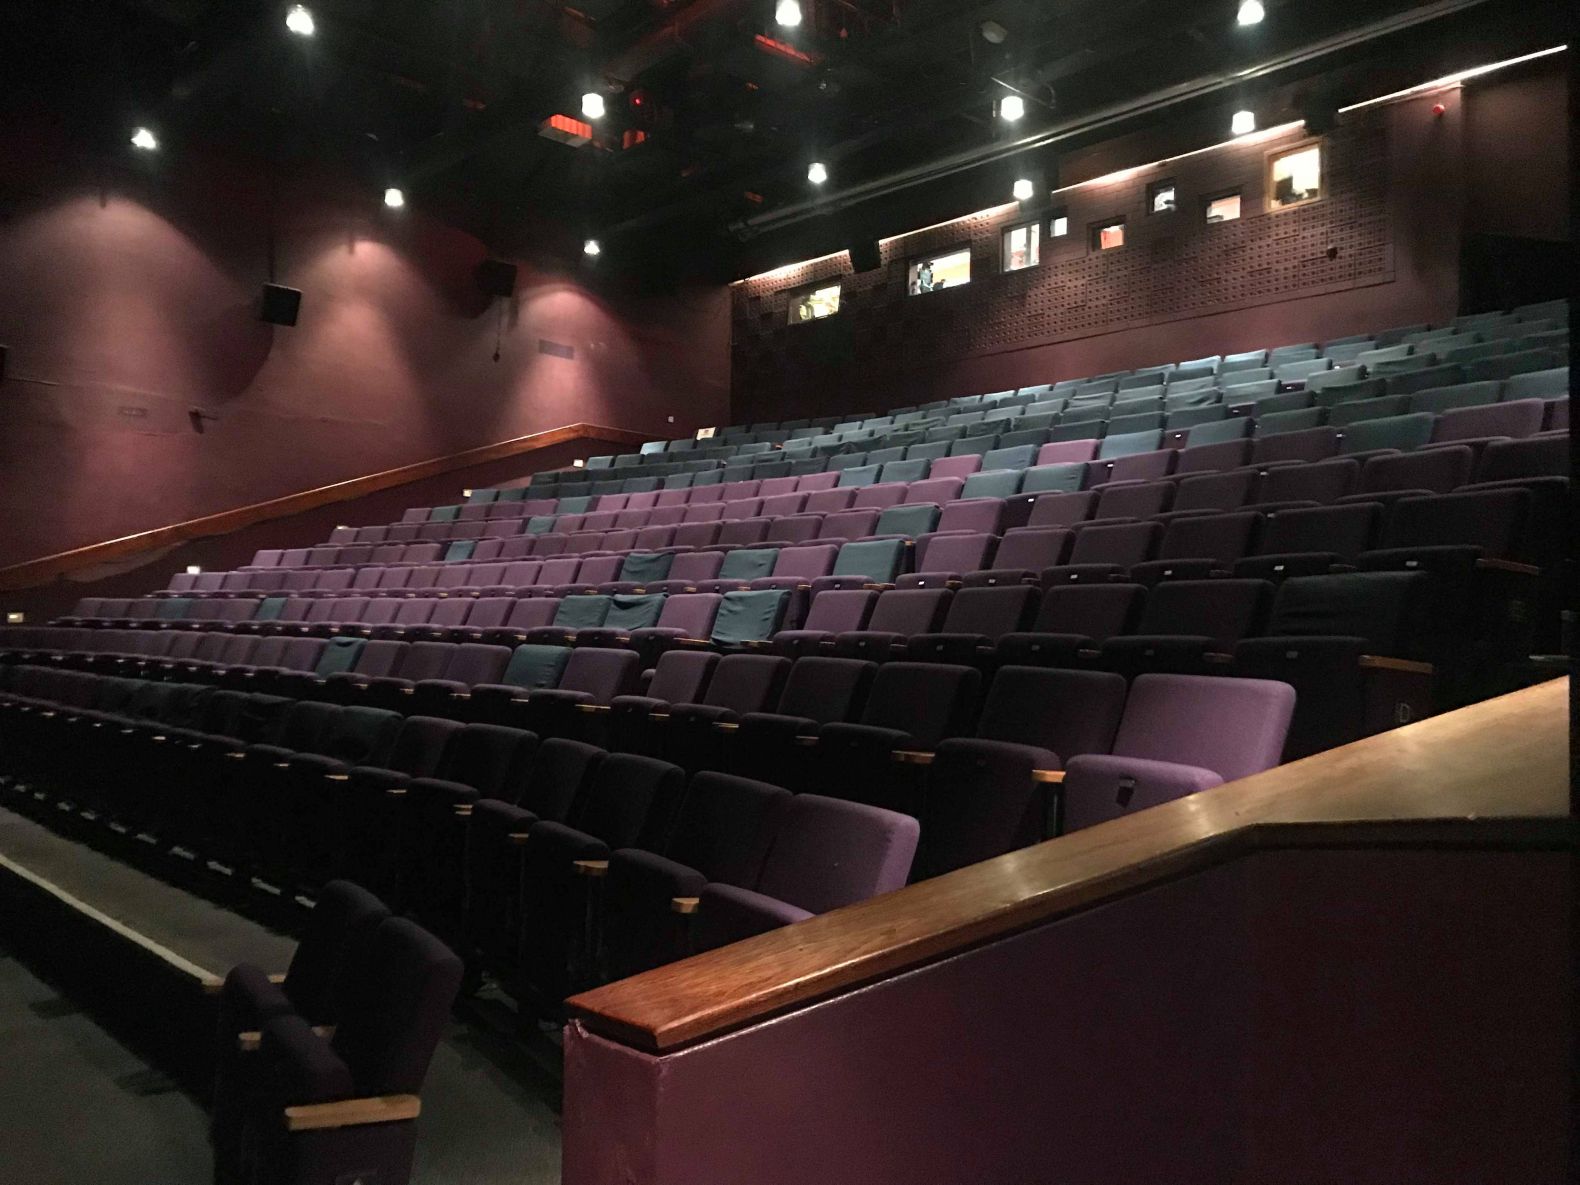 313 seater auditorium with purple seats